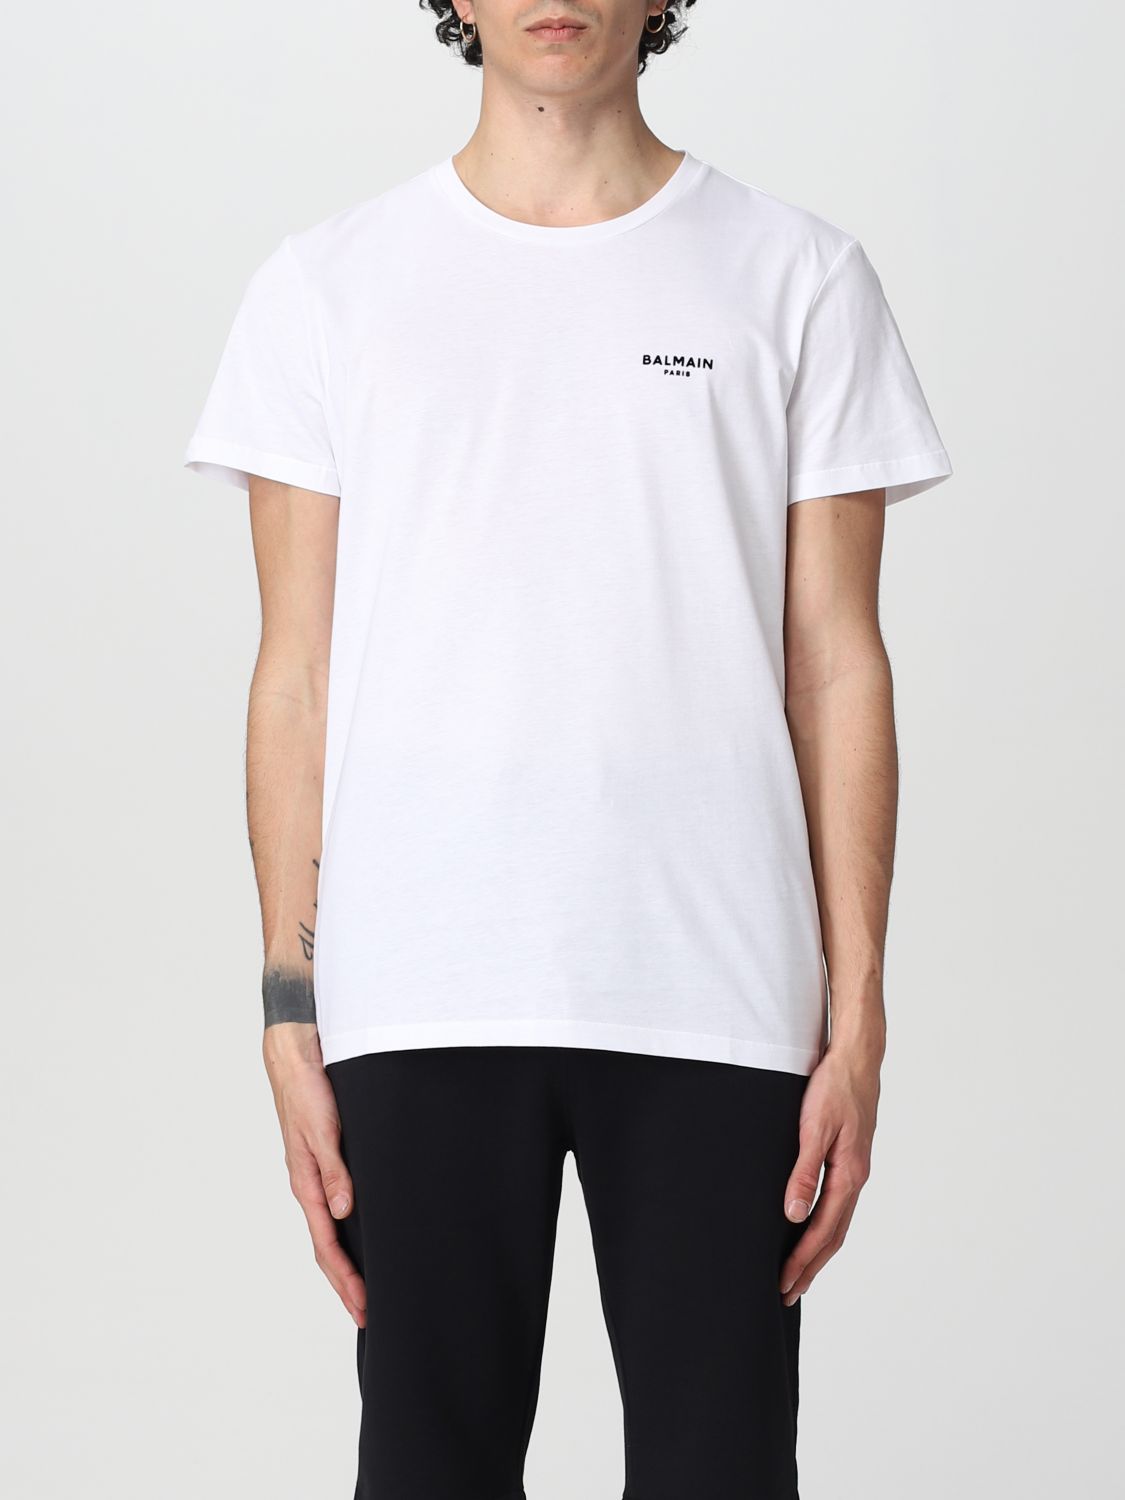 Balmain Men's White Cotton T-shirt | ModeSens